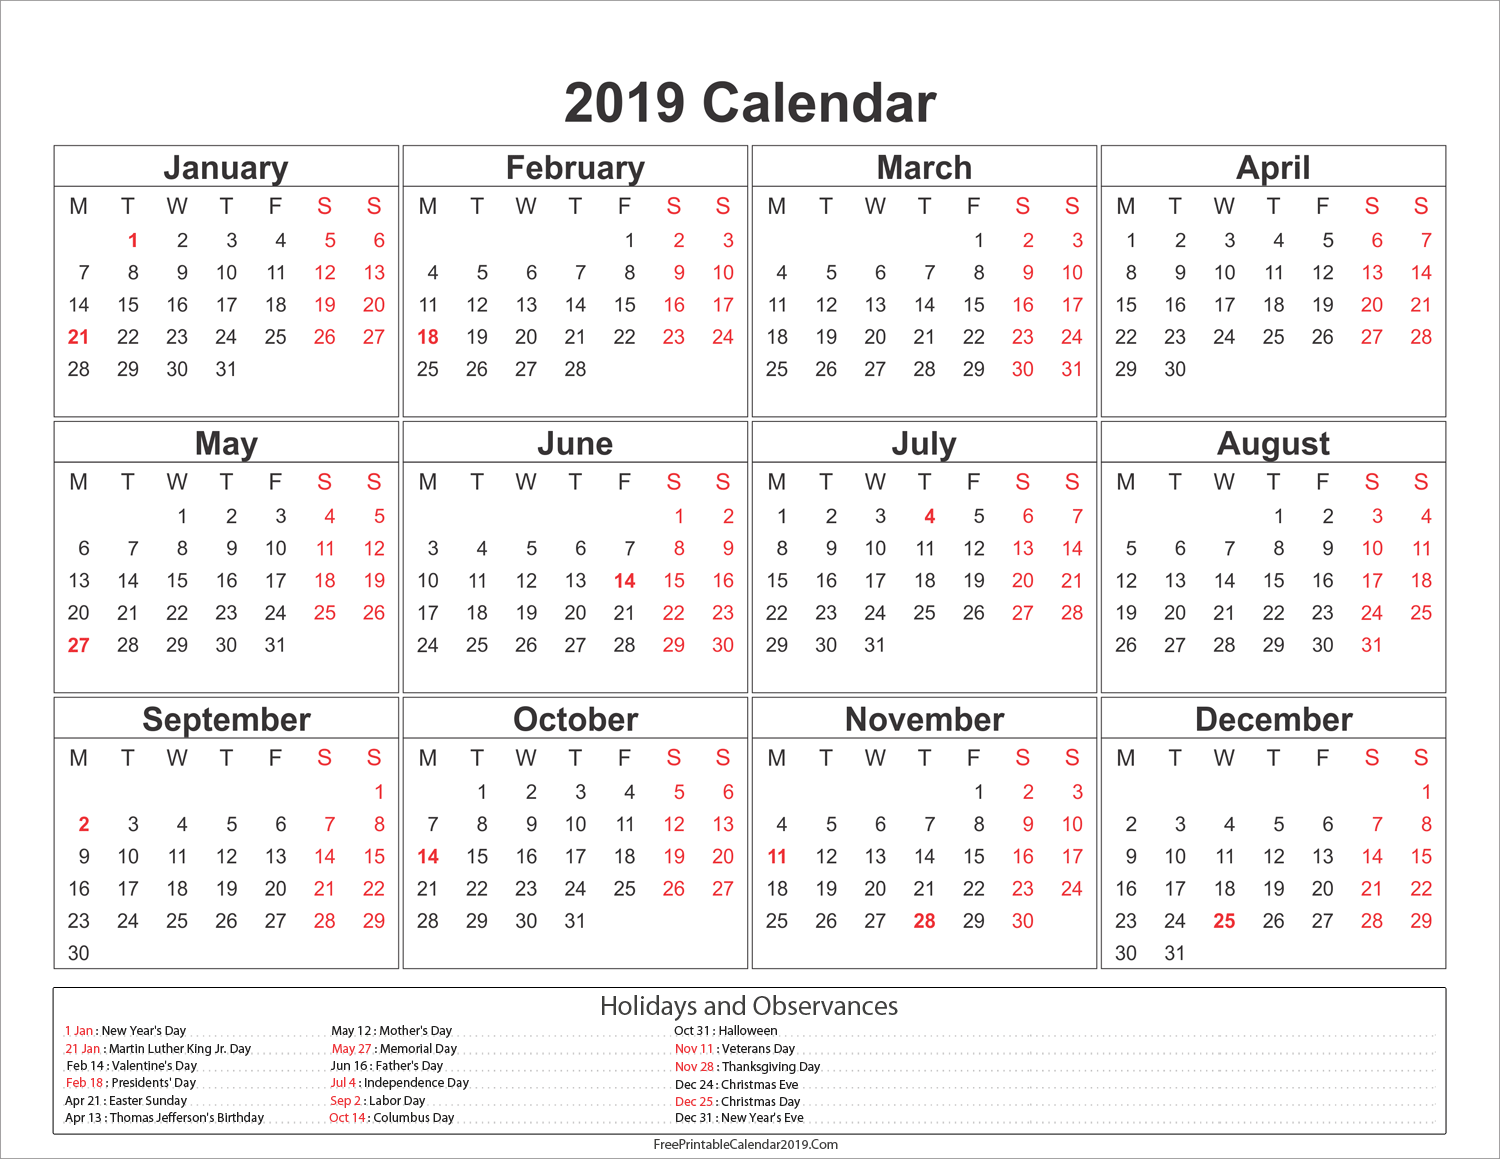 November 2018 calendar